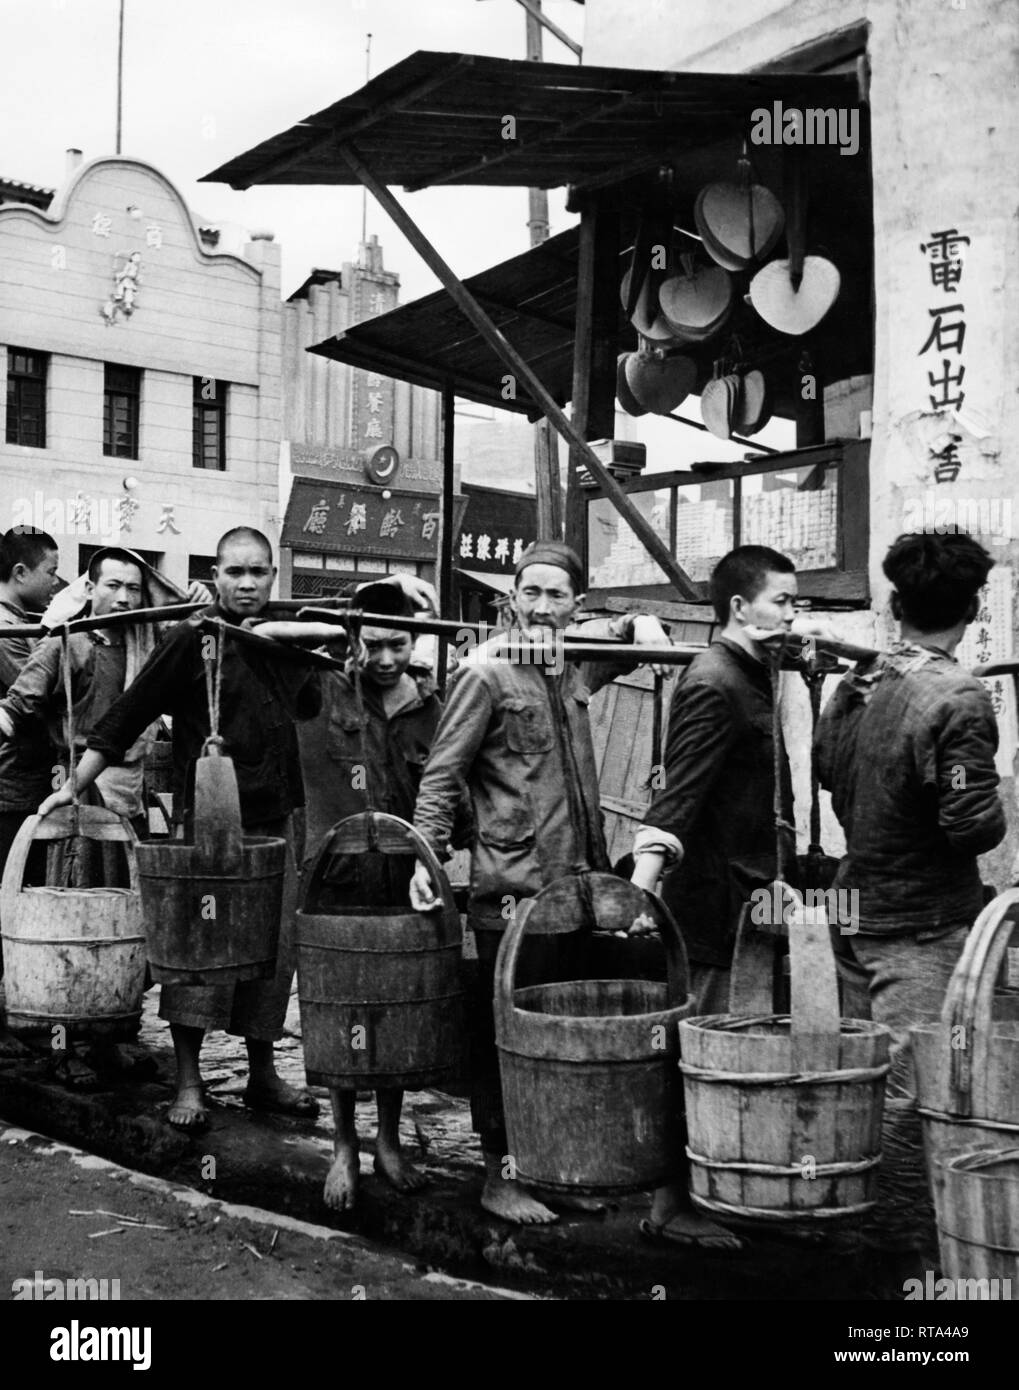 Portatori di acqua, Cina, Asia, 1956 Foto Stock